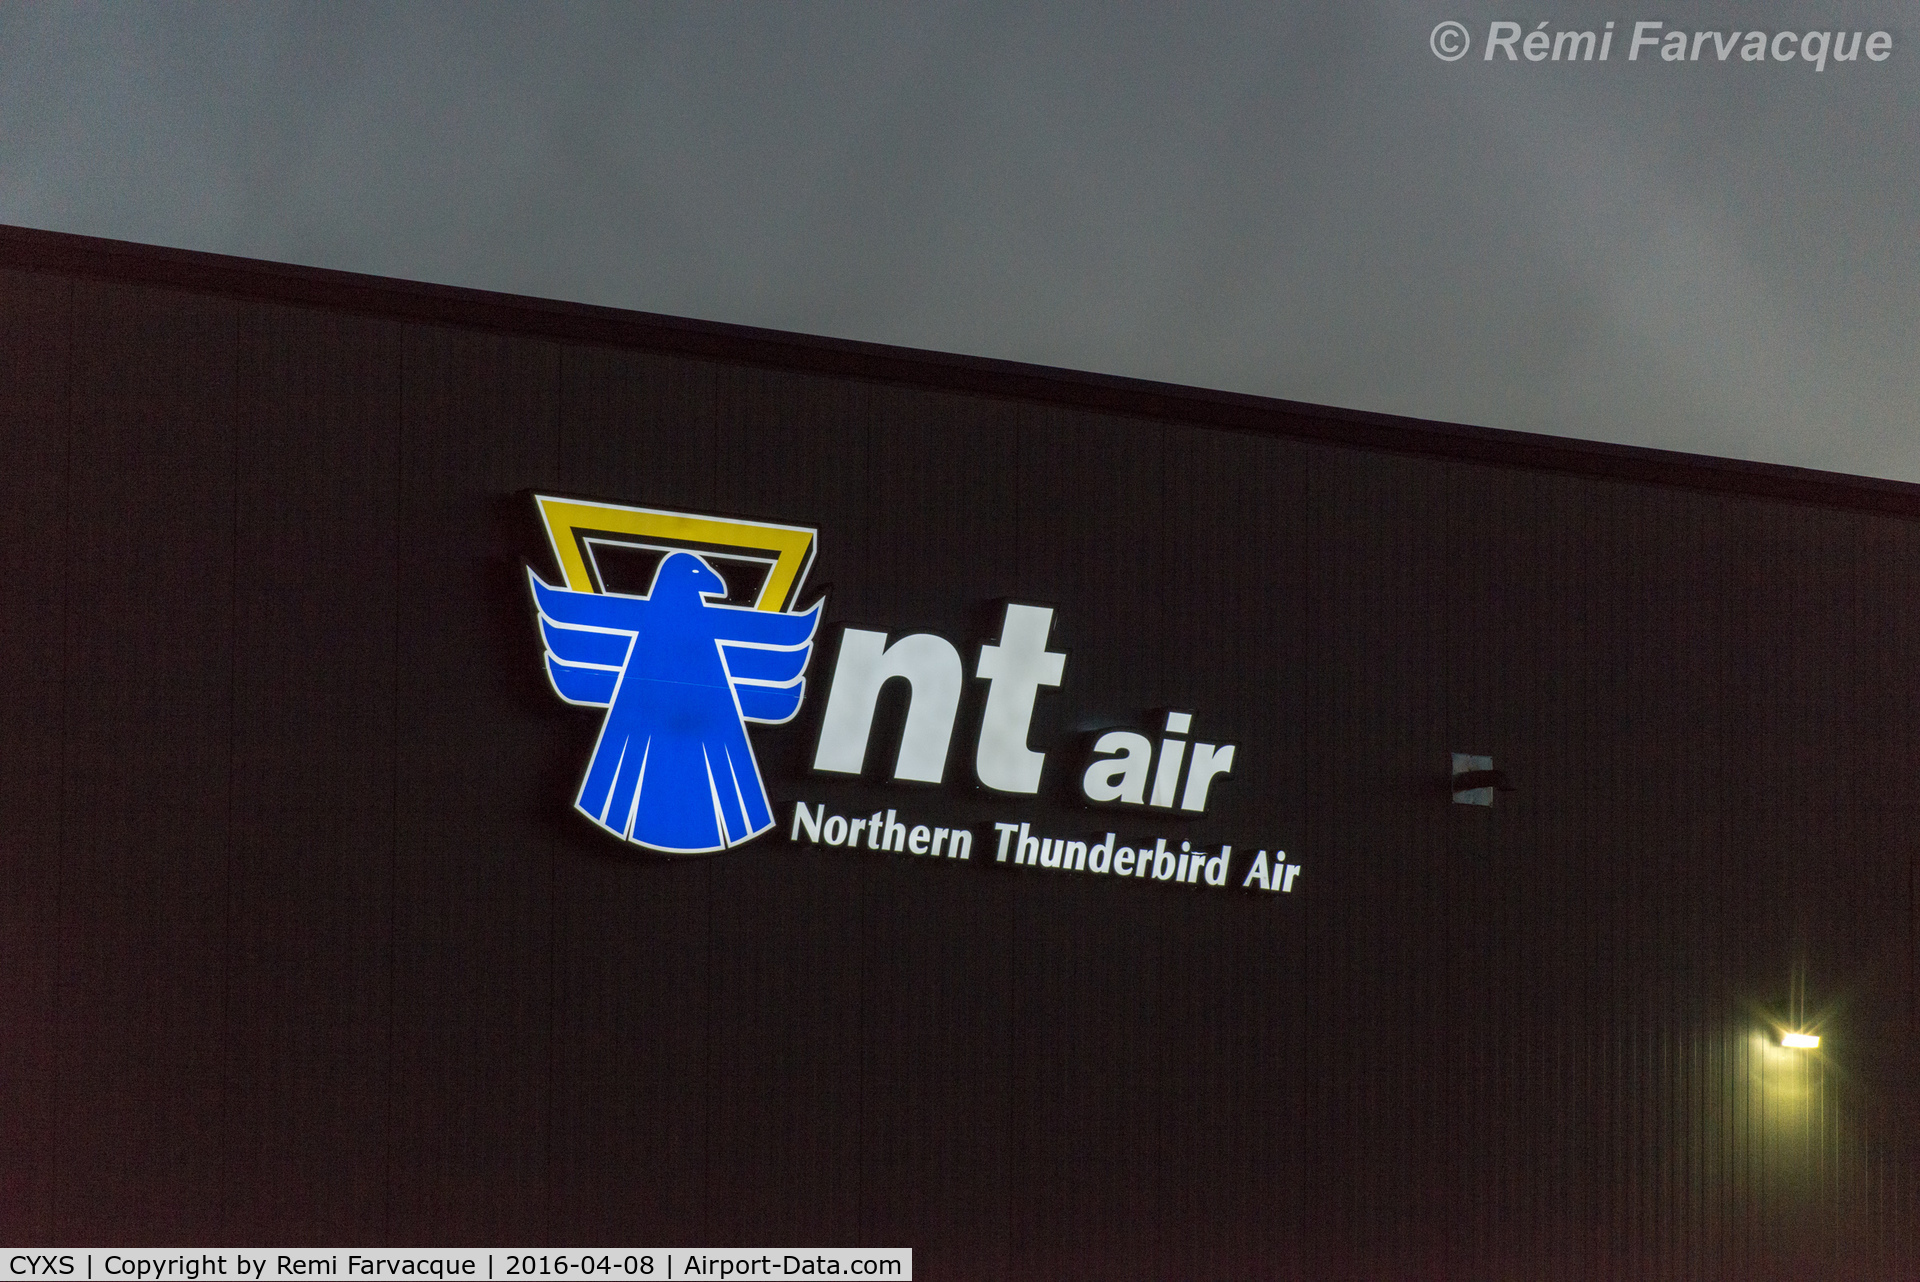 Prince George Airport, Prince George, British Columbia Canada (CYXS) - NT Air hangar sign.